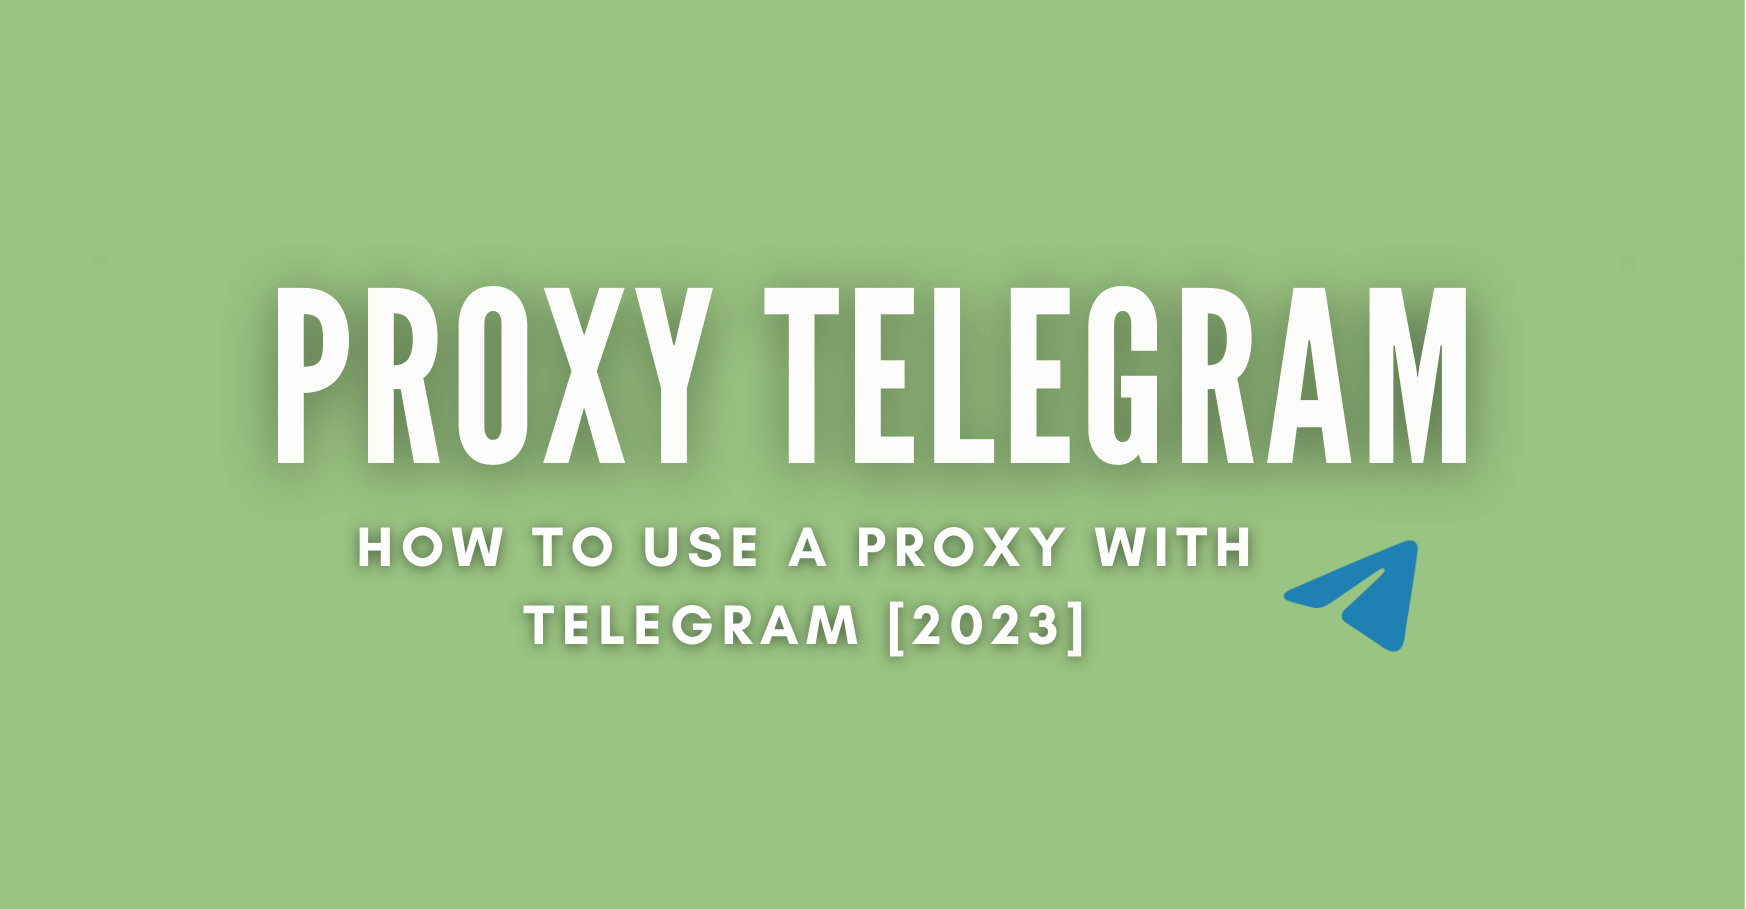 Proxy Telegram guide